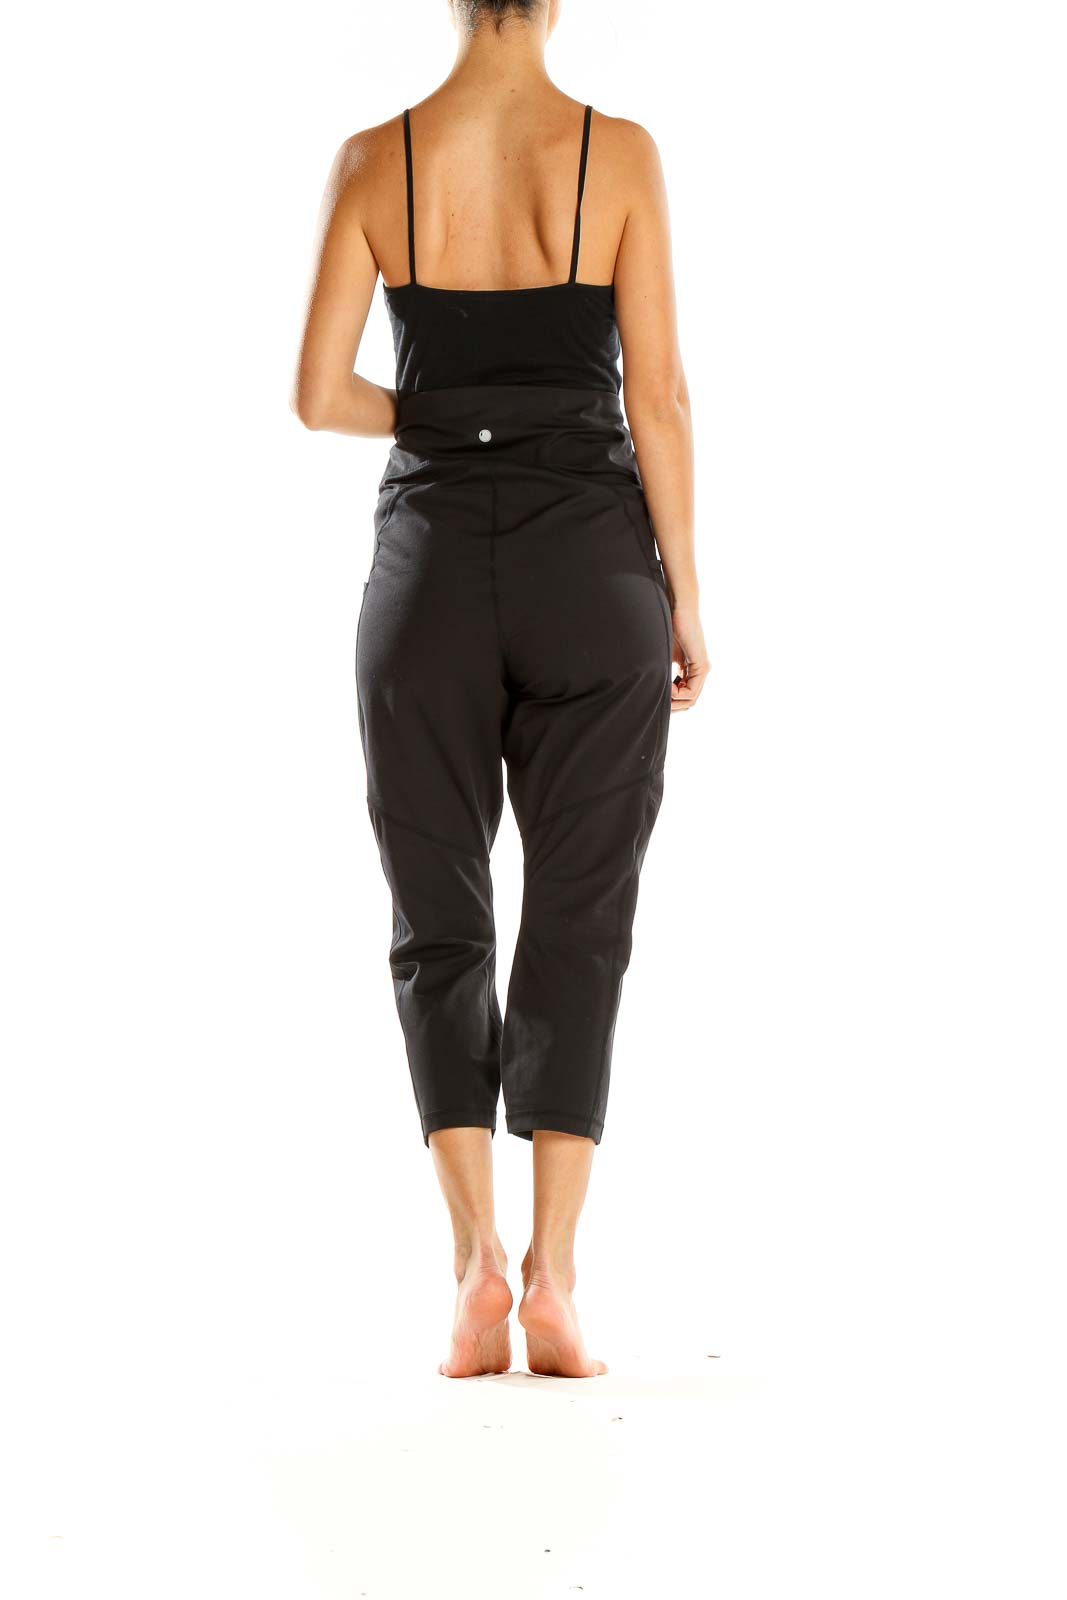 Yogalicious - Black Cropped Activewear Leggings Polyester Spandex